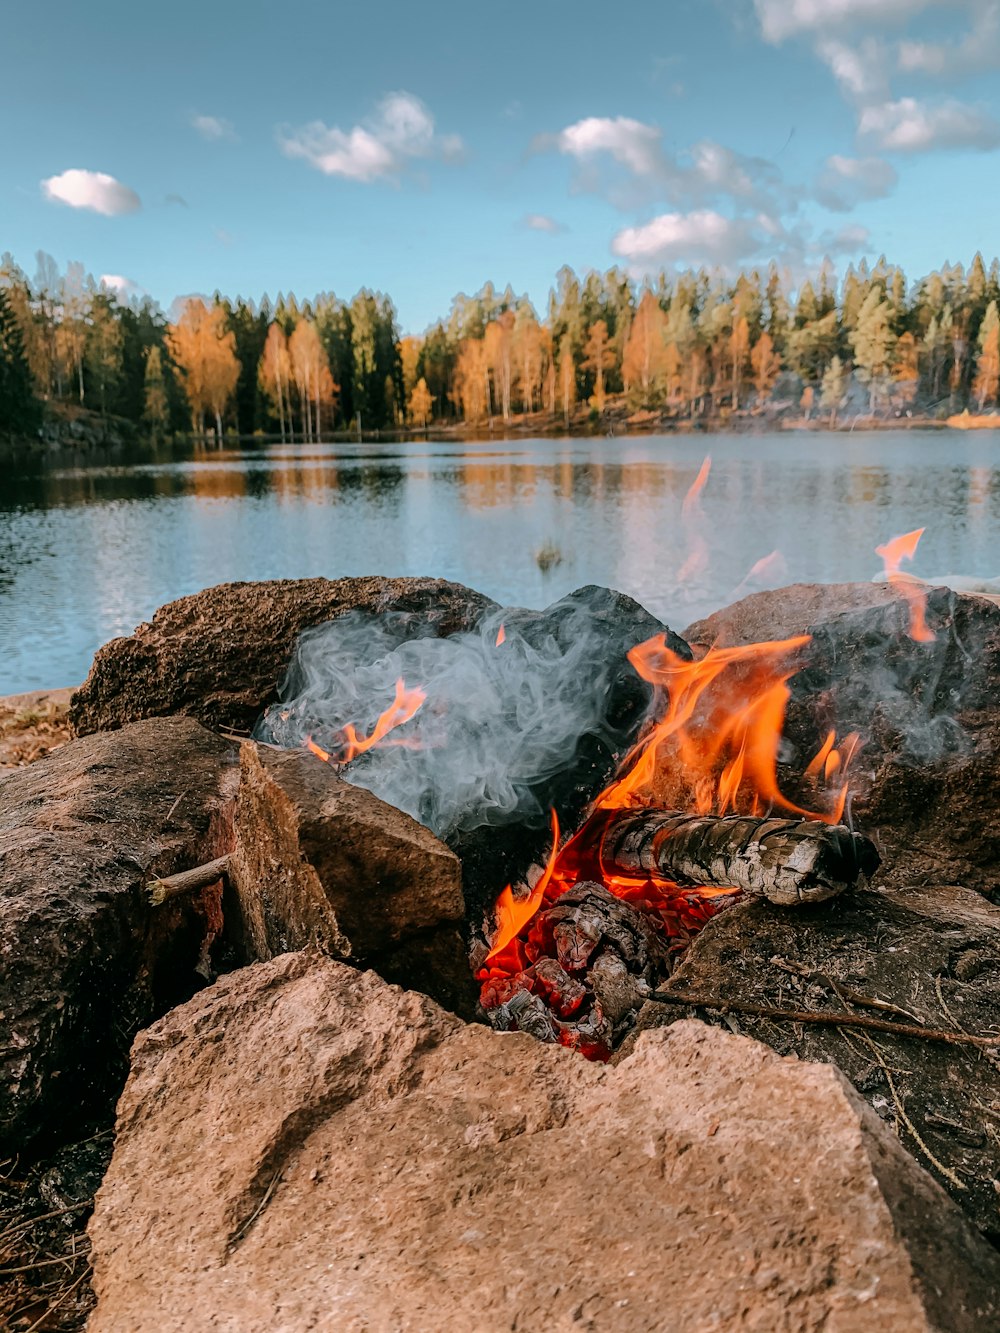 burning wood near body of water during daytime